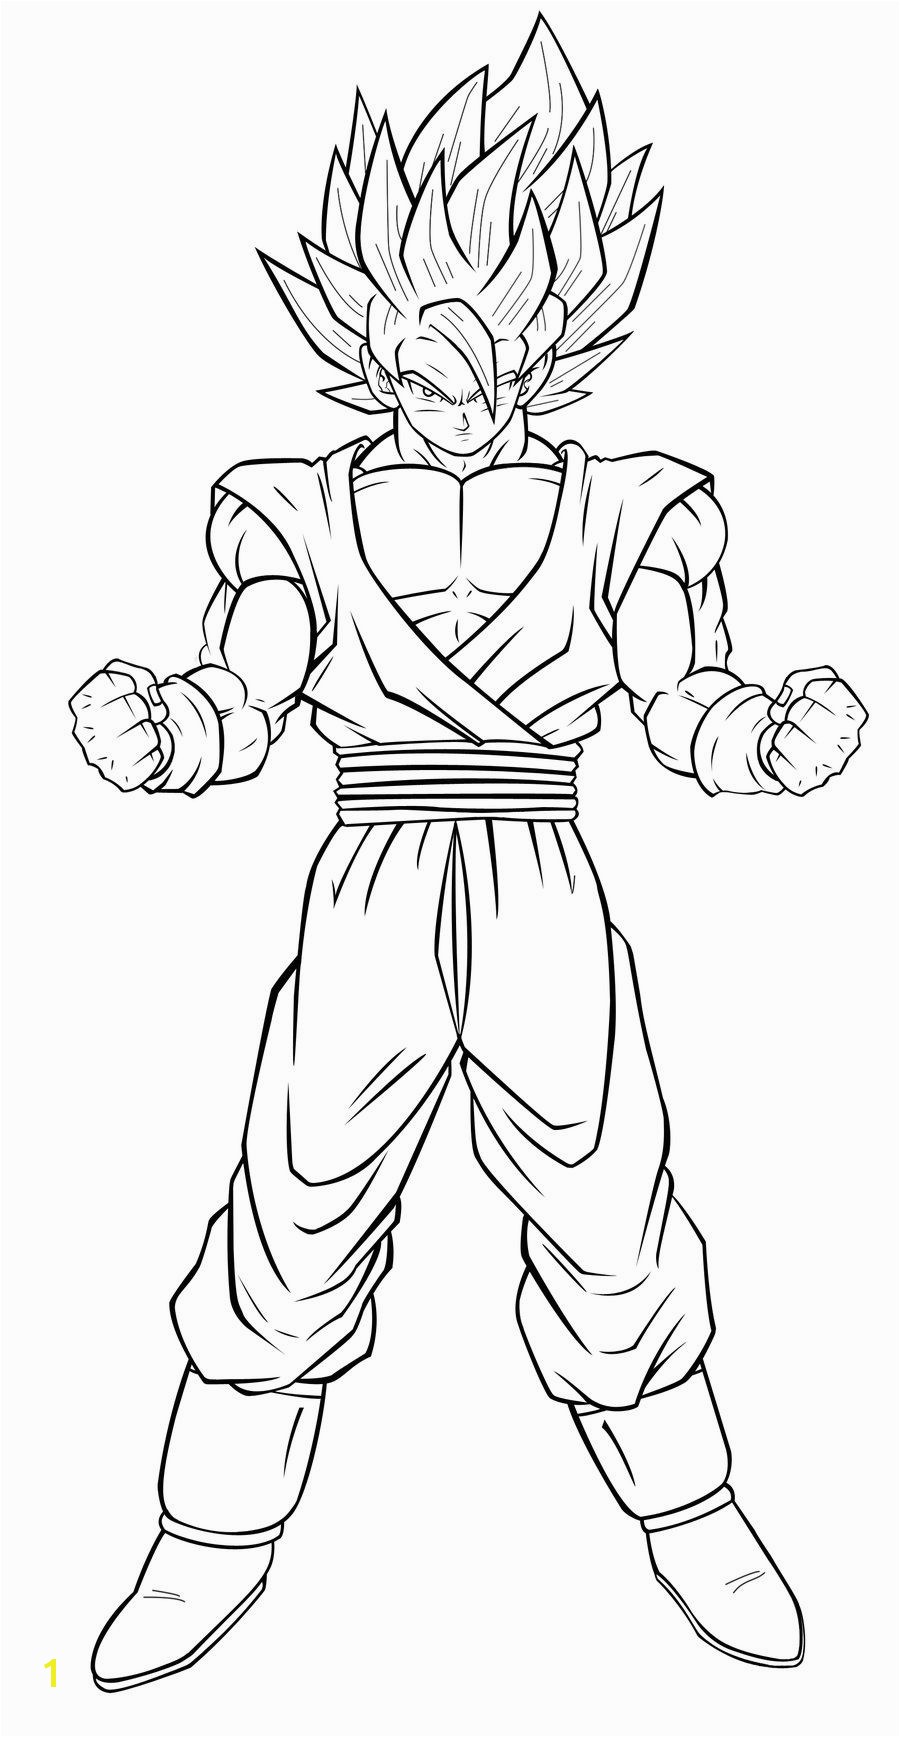 Goku Super Saiyan 4 Coloring Pages images